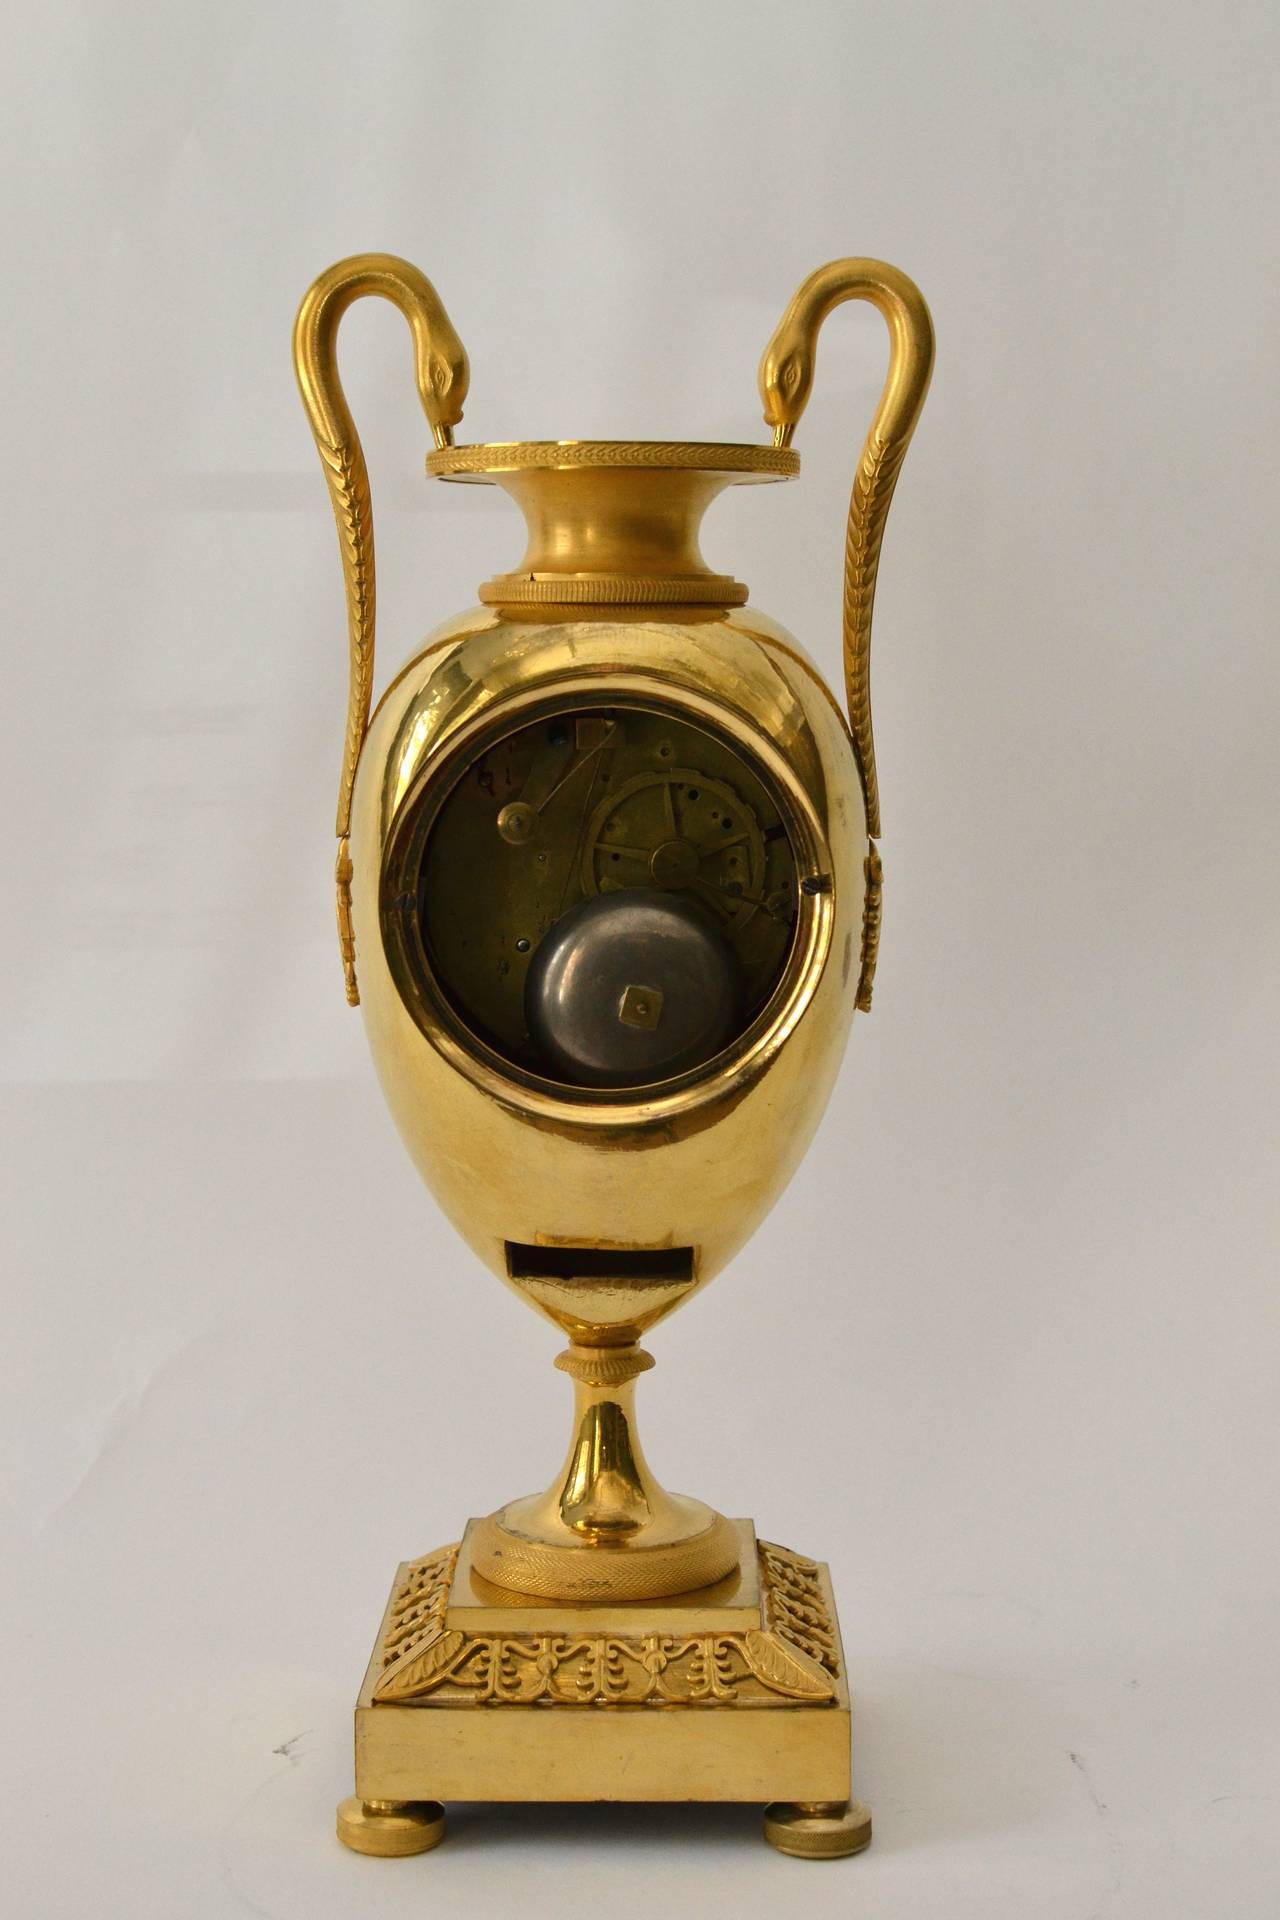 French Empire Ormolu Mantel Clock, Early 19th Century